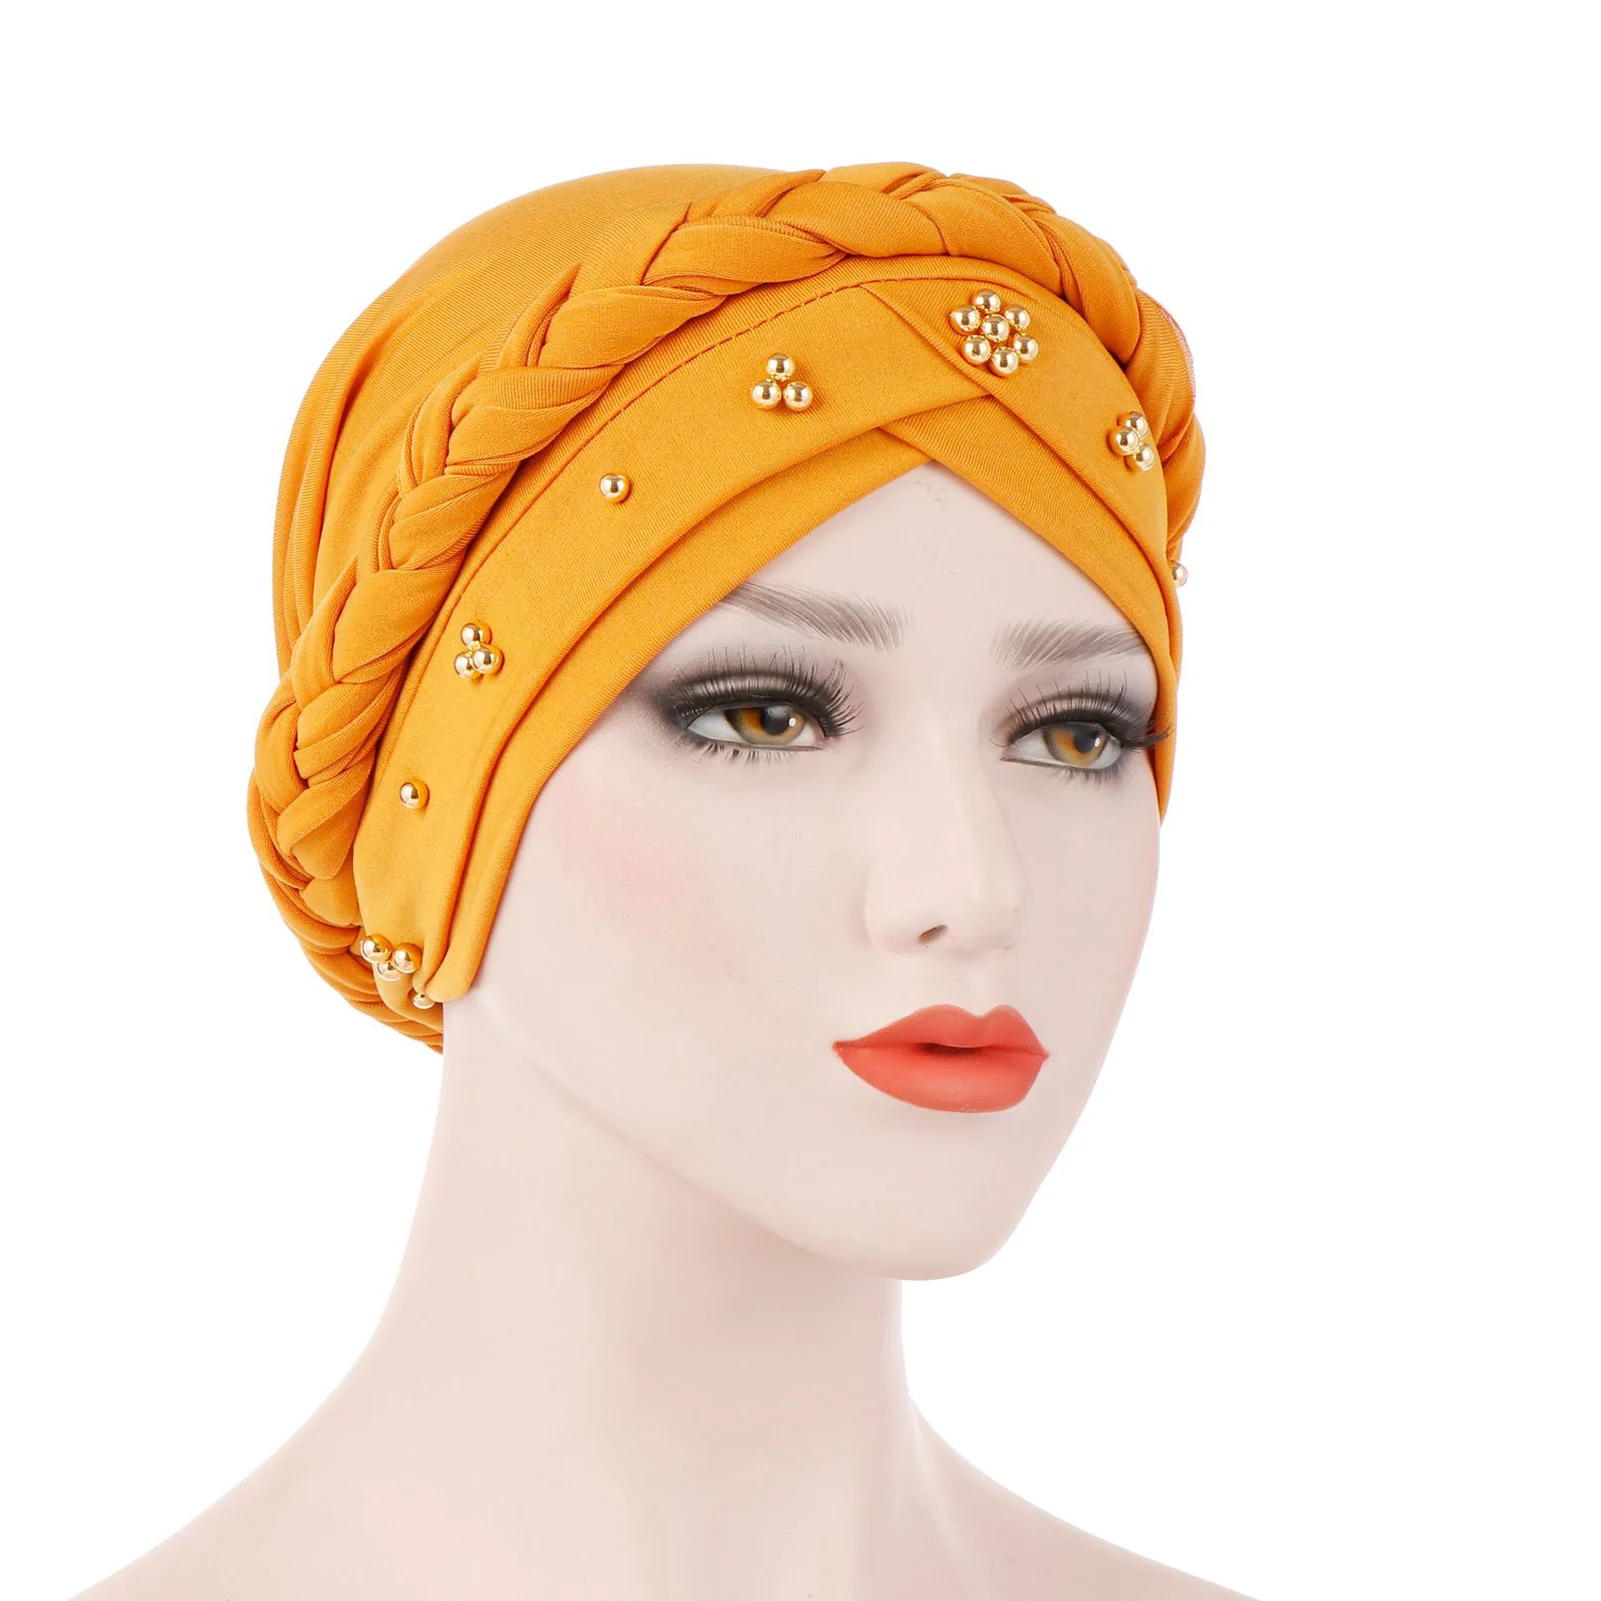 

Bonnet Hijab Islamic Headscarf Highly Stretch Turban Chemo Cap Ladies Hair Accessories d88